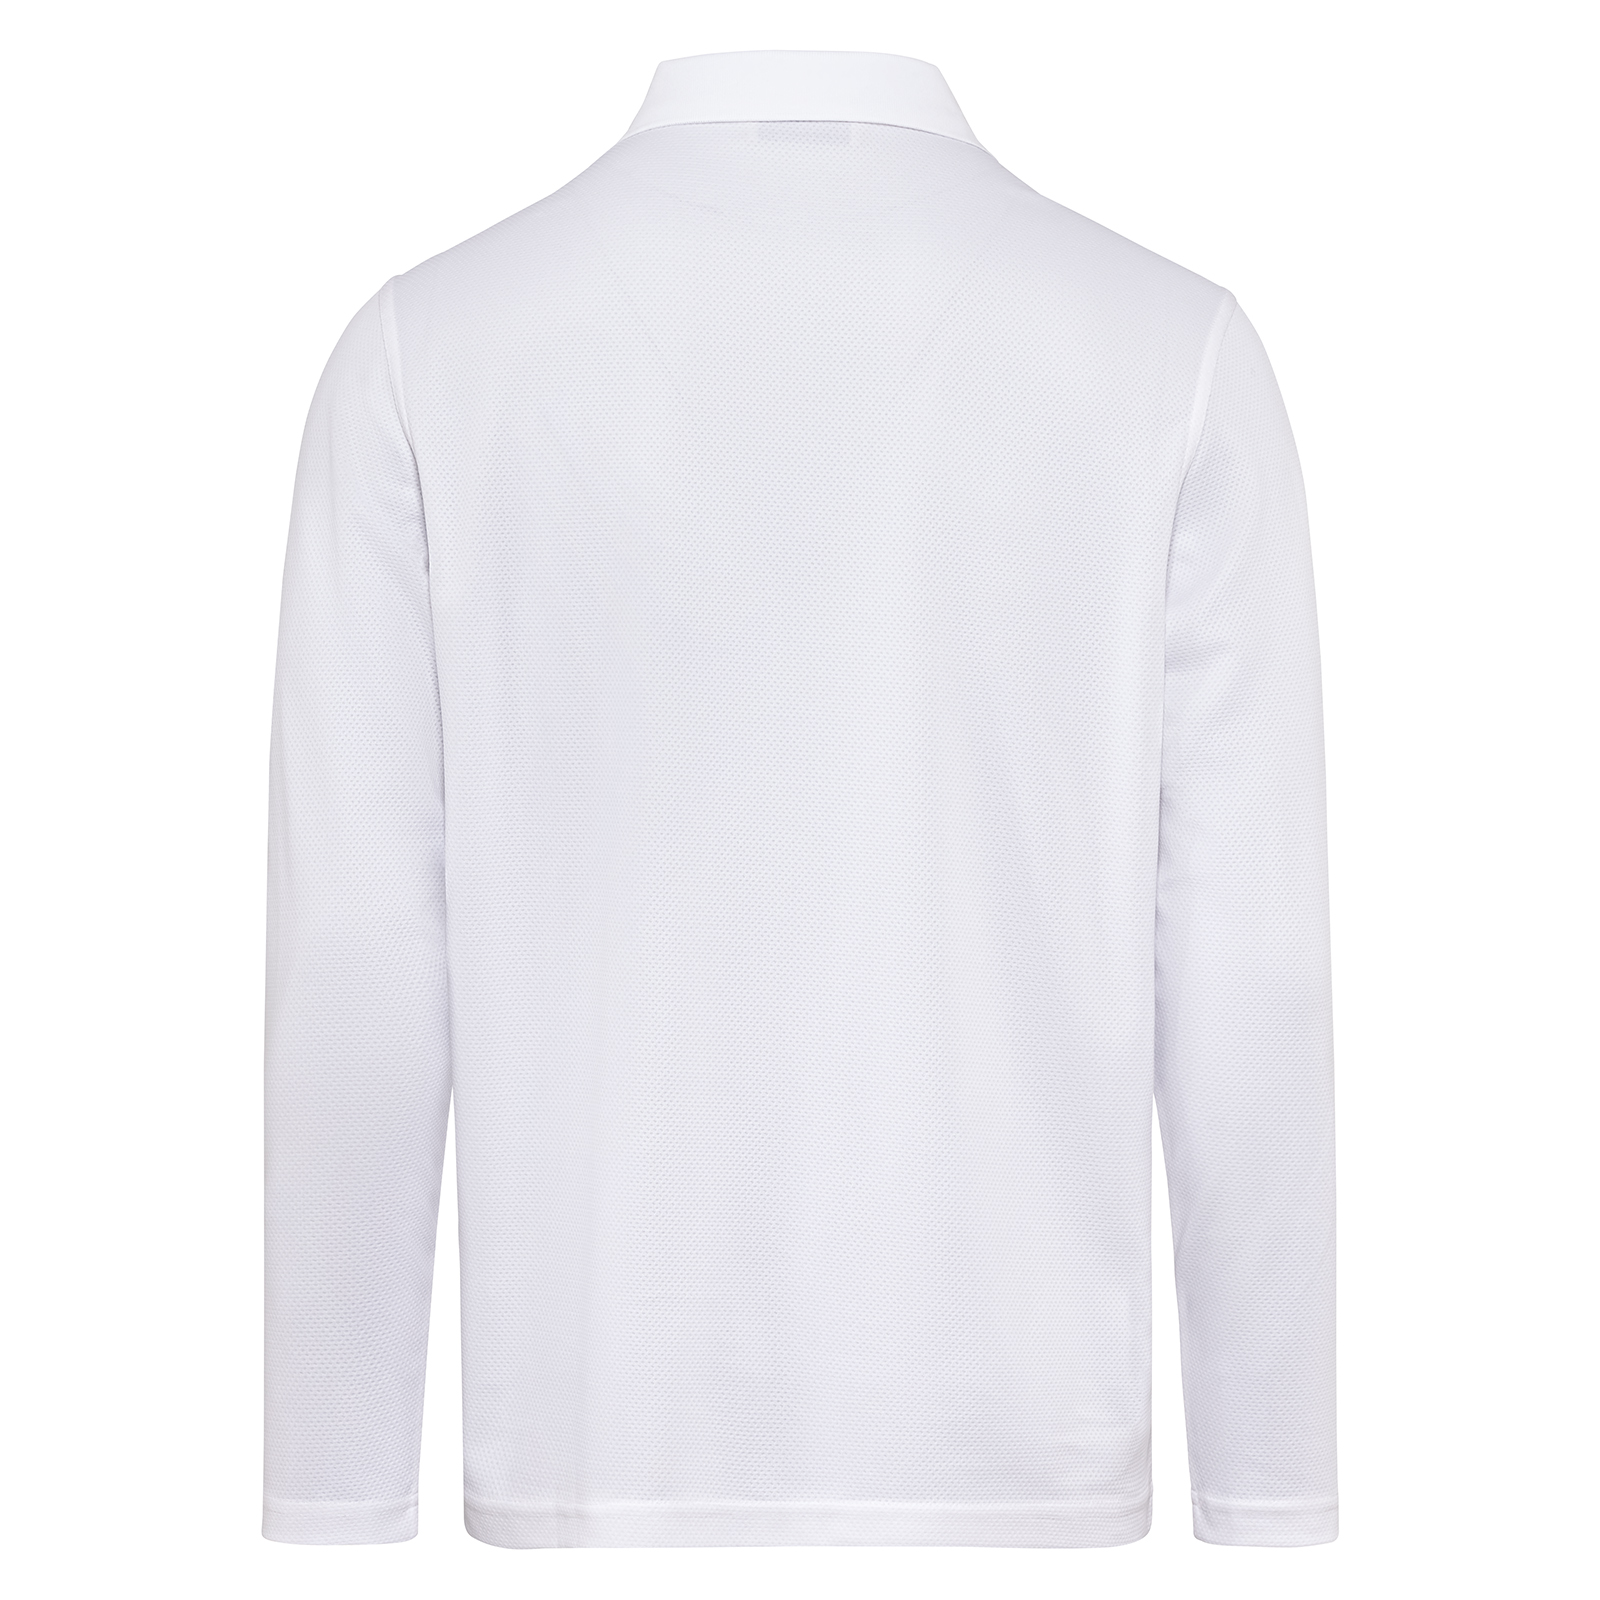 Versatile men's long-sleeved polo shirt